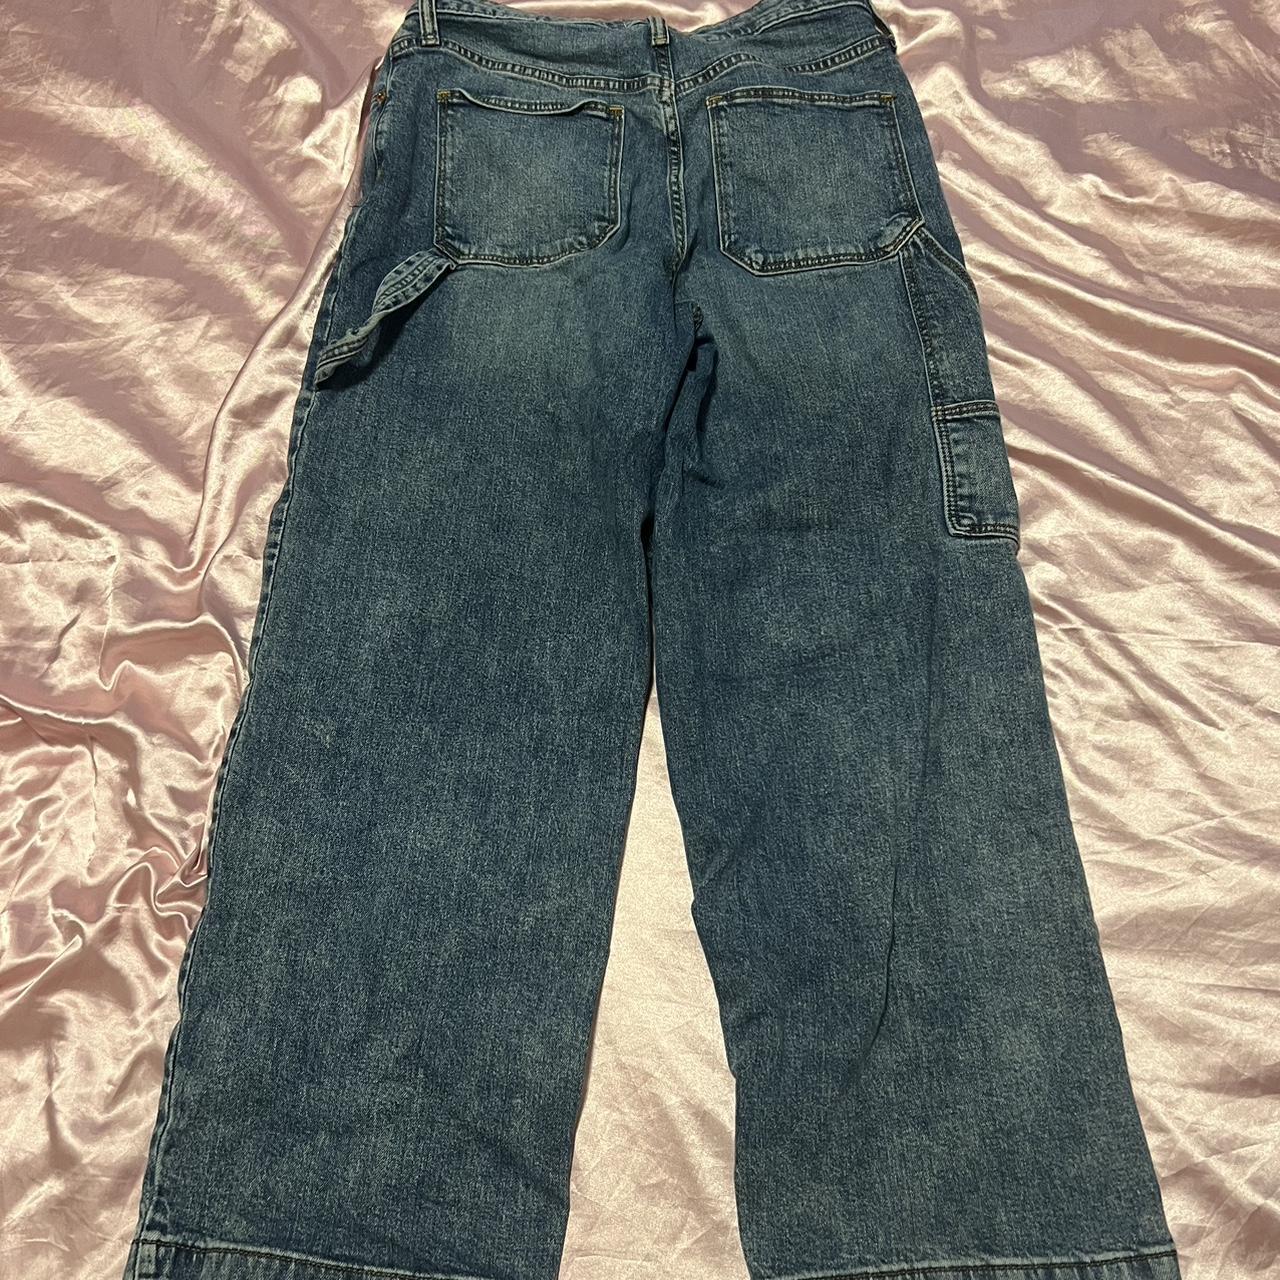 Nice Carpenter jeans - Depop